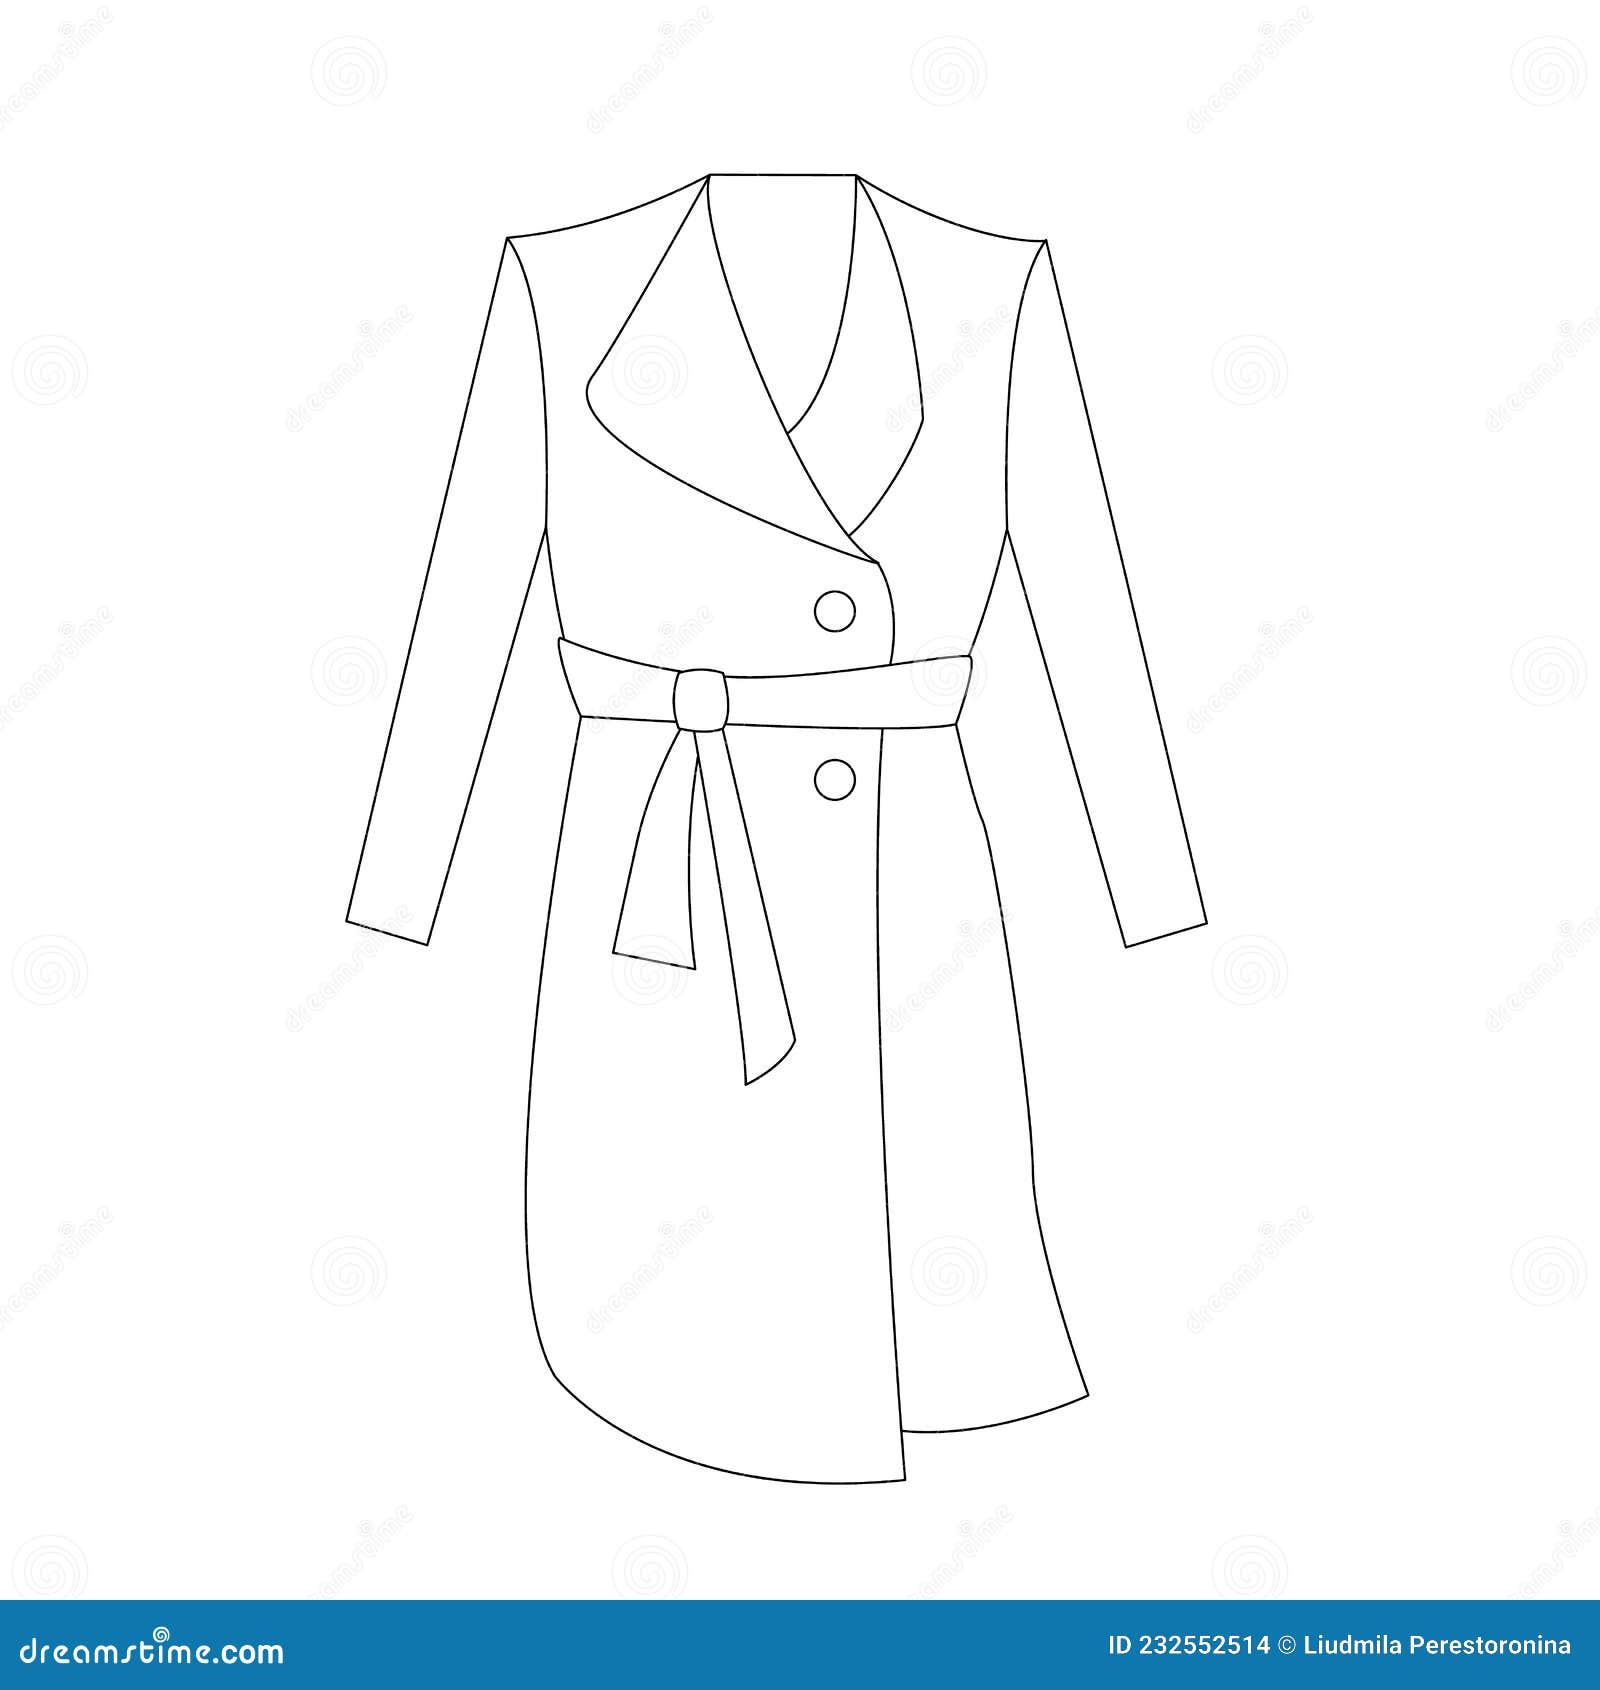 Vector Outline Illustration of a Raincoat or Coat. Stock Illustration ...